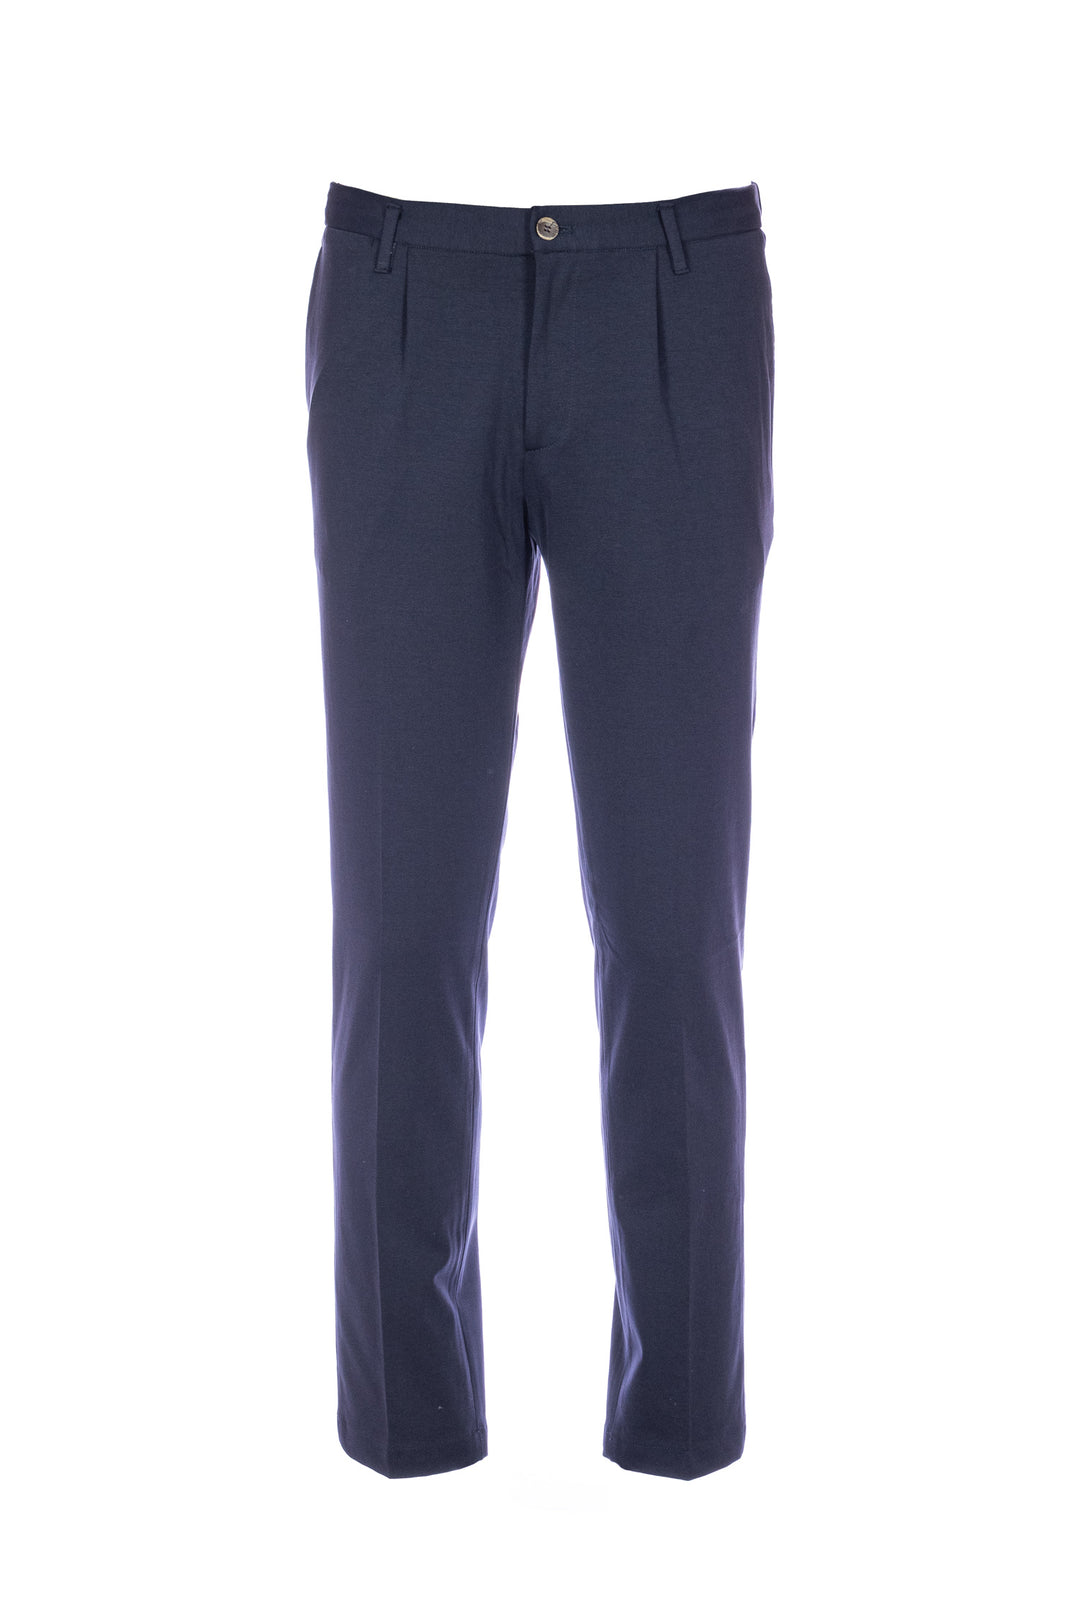 DEVORE Pantalone blu navy in cotone stretch con vita elastica e una pince - Mancinelli 1954